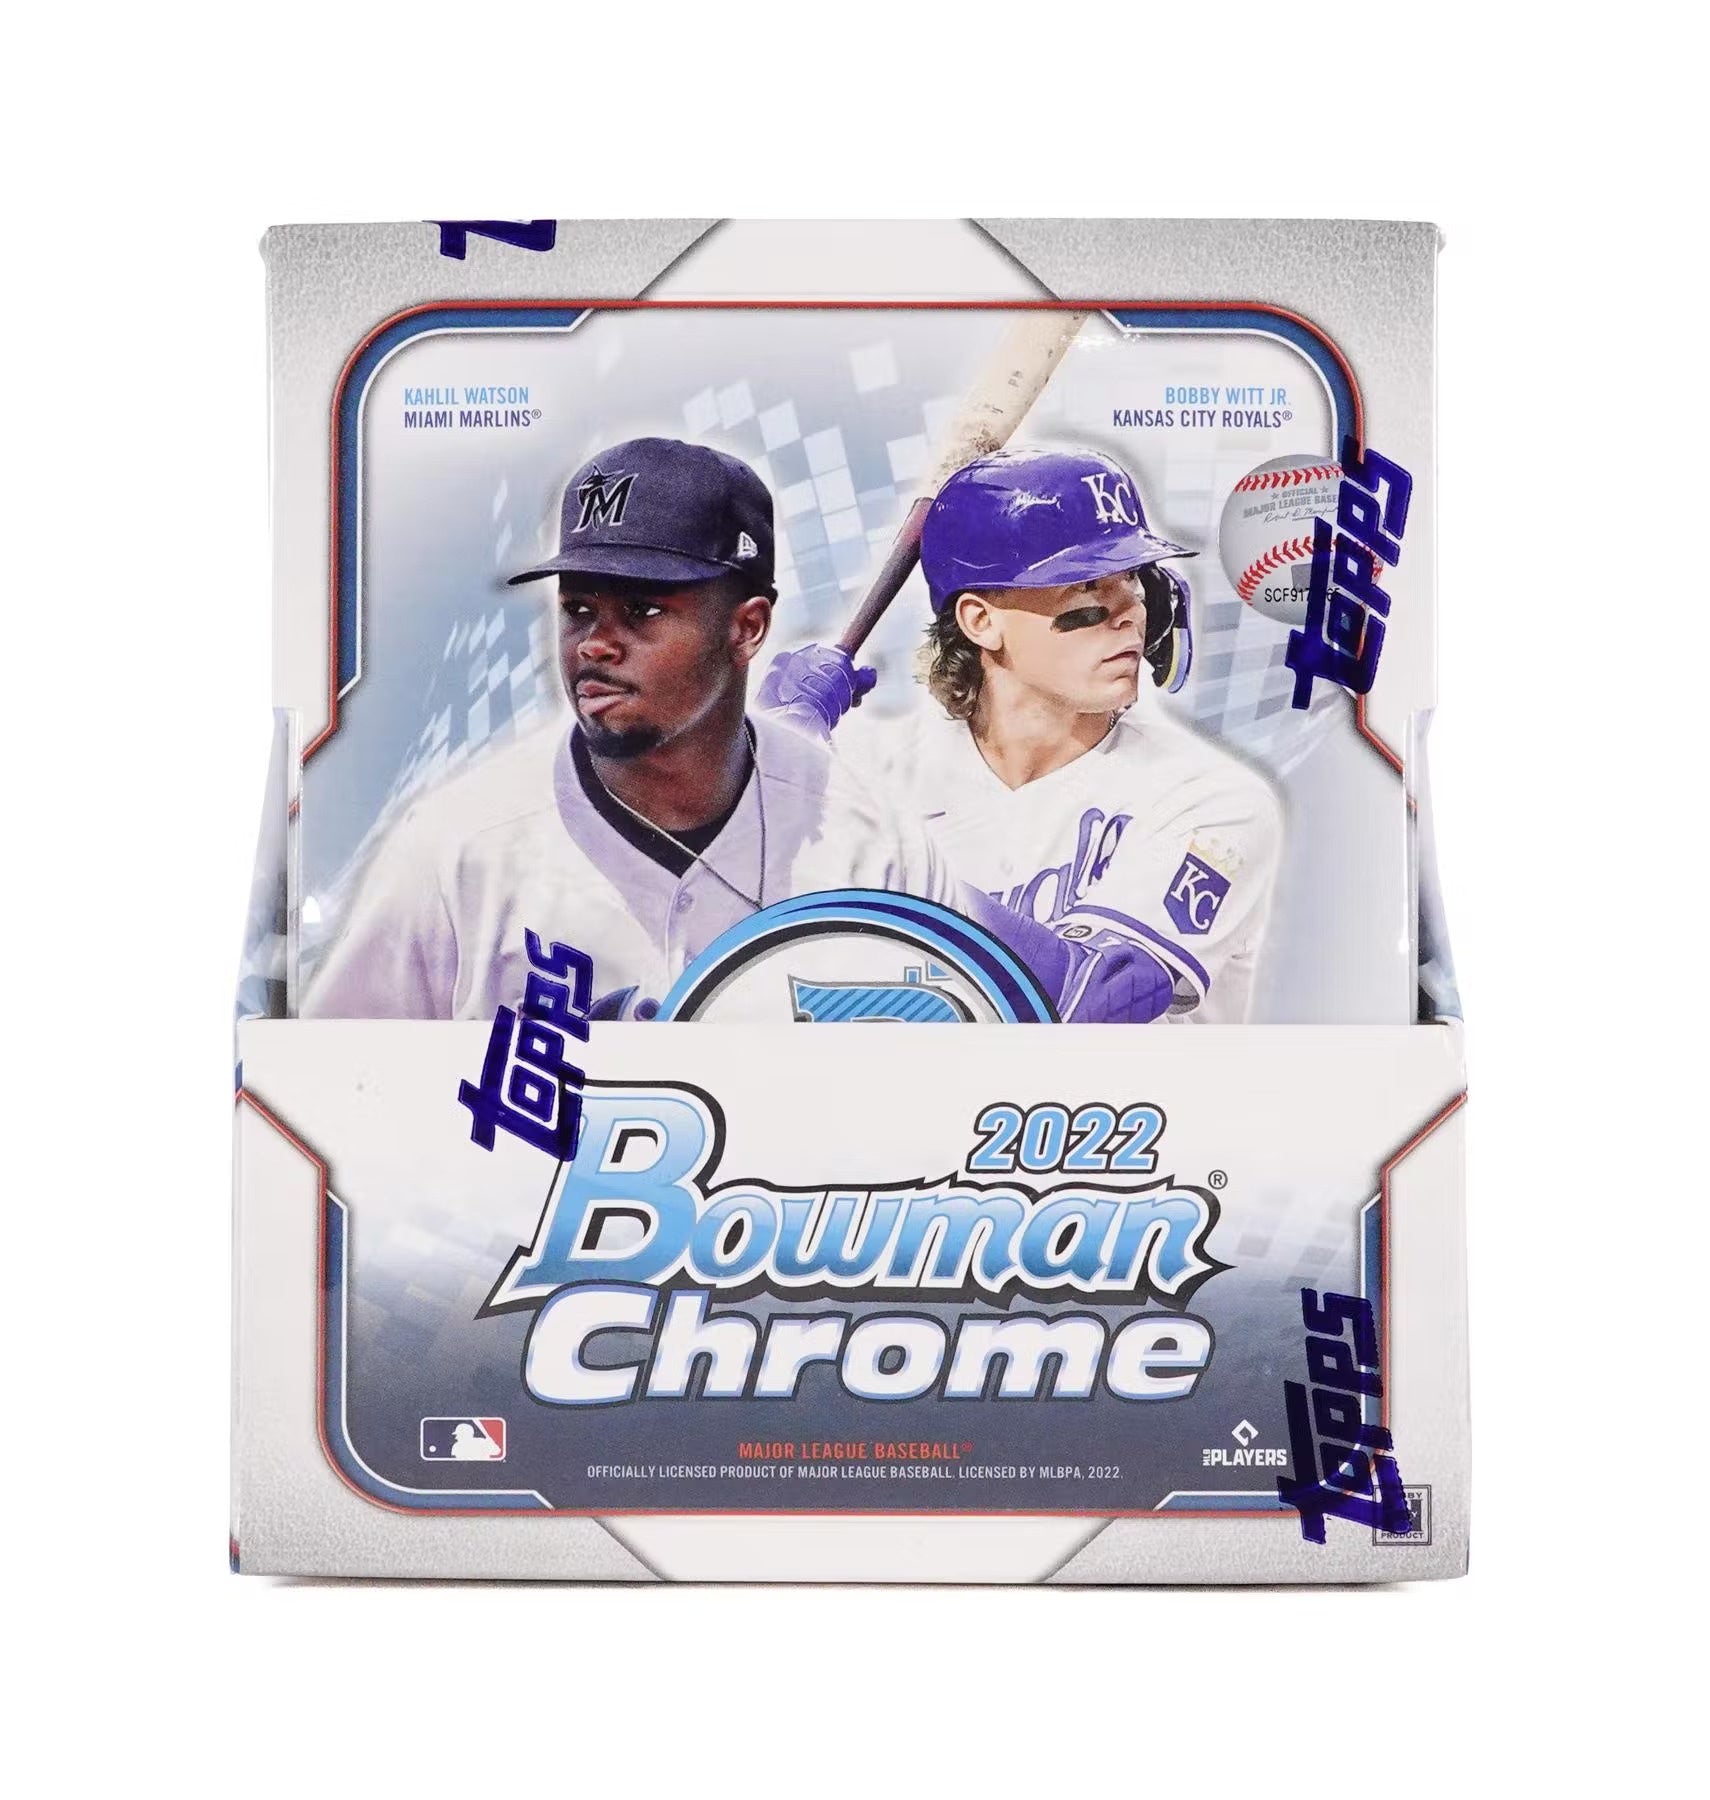 2023 Bowman Draft Baseball Hobby Jumbo Box - Legends Fan Shop